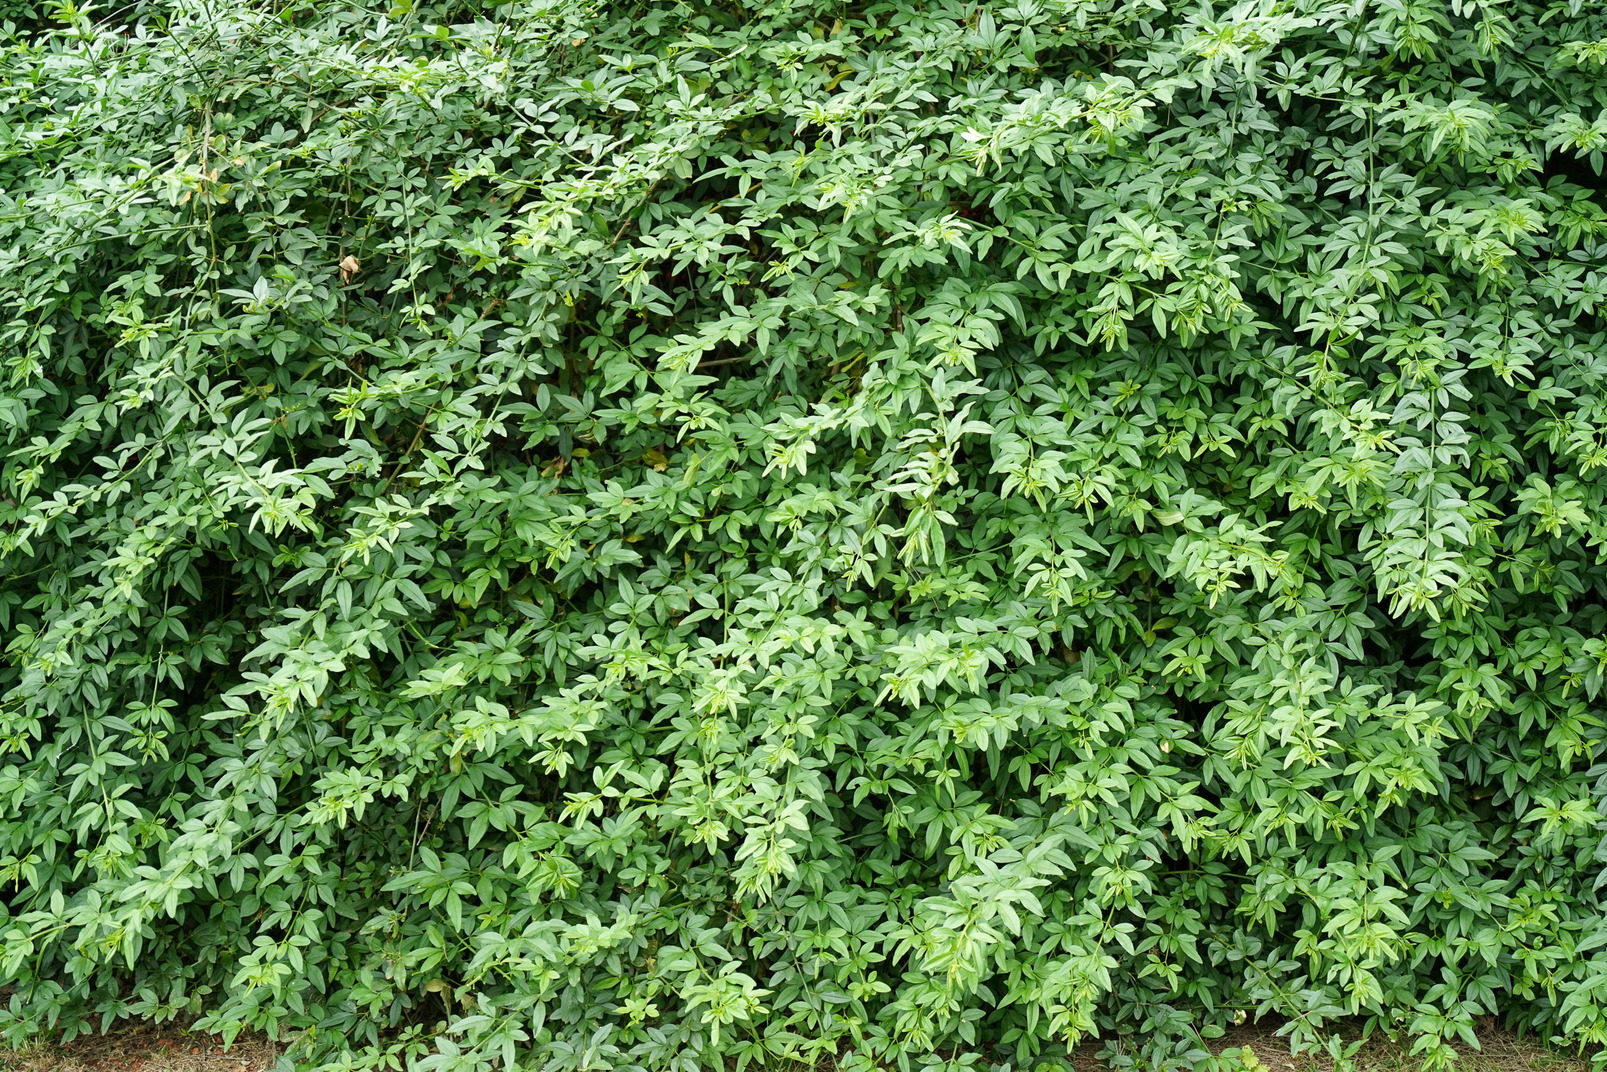 Green bush's leaves